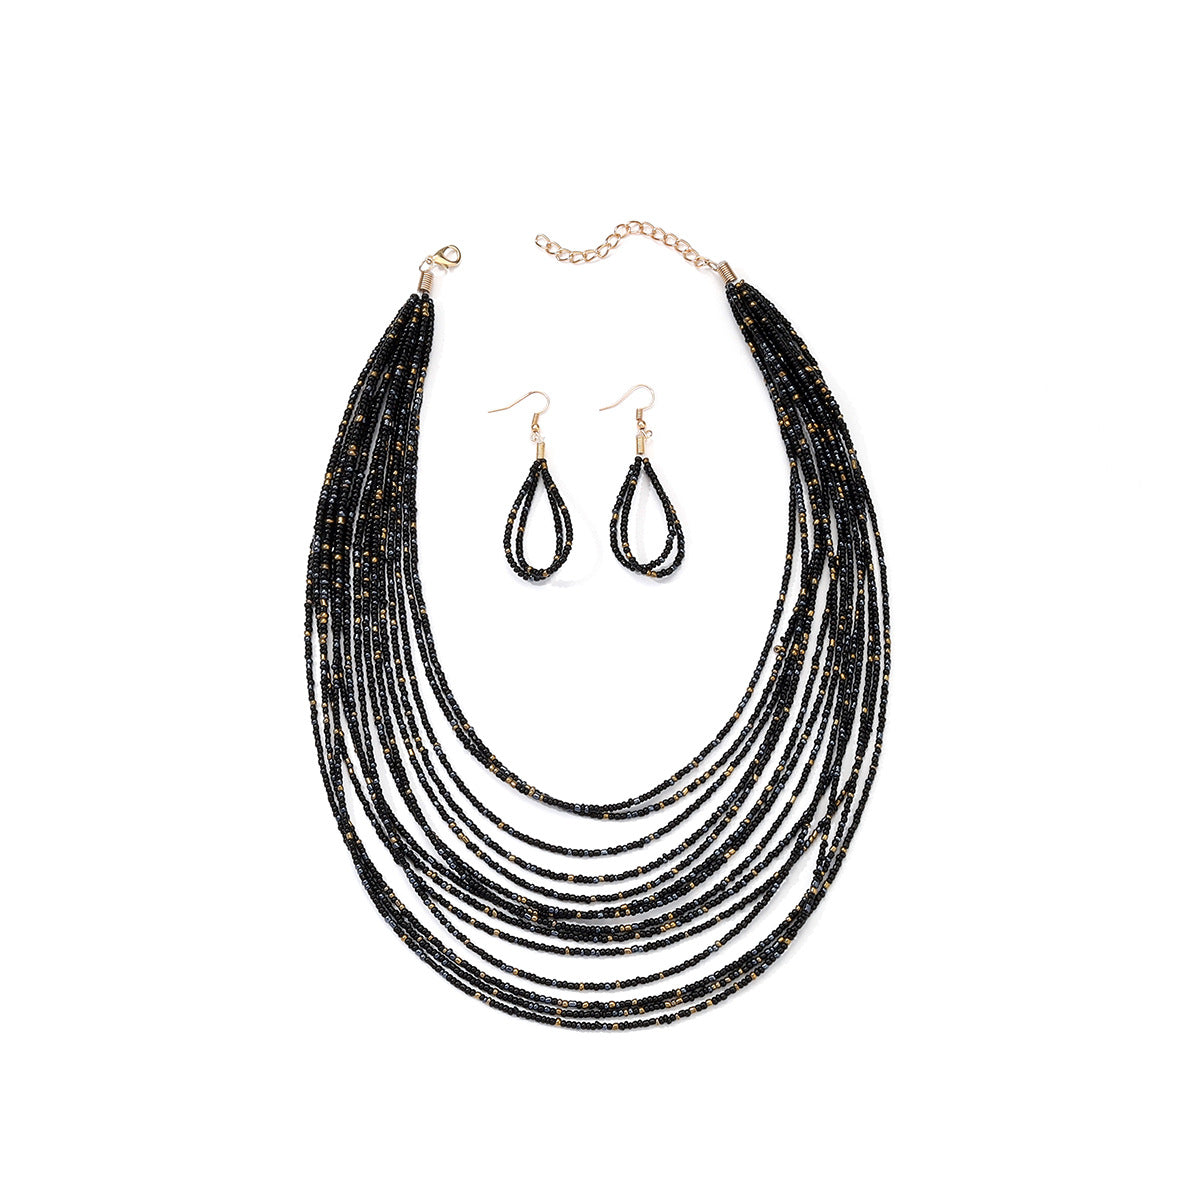 Ethnic Style Streetwear Colorful Alloy Women's Earrings Necklace